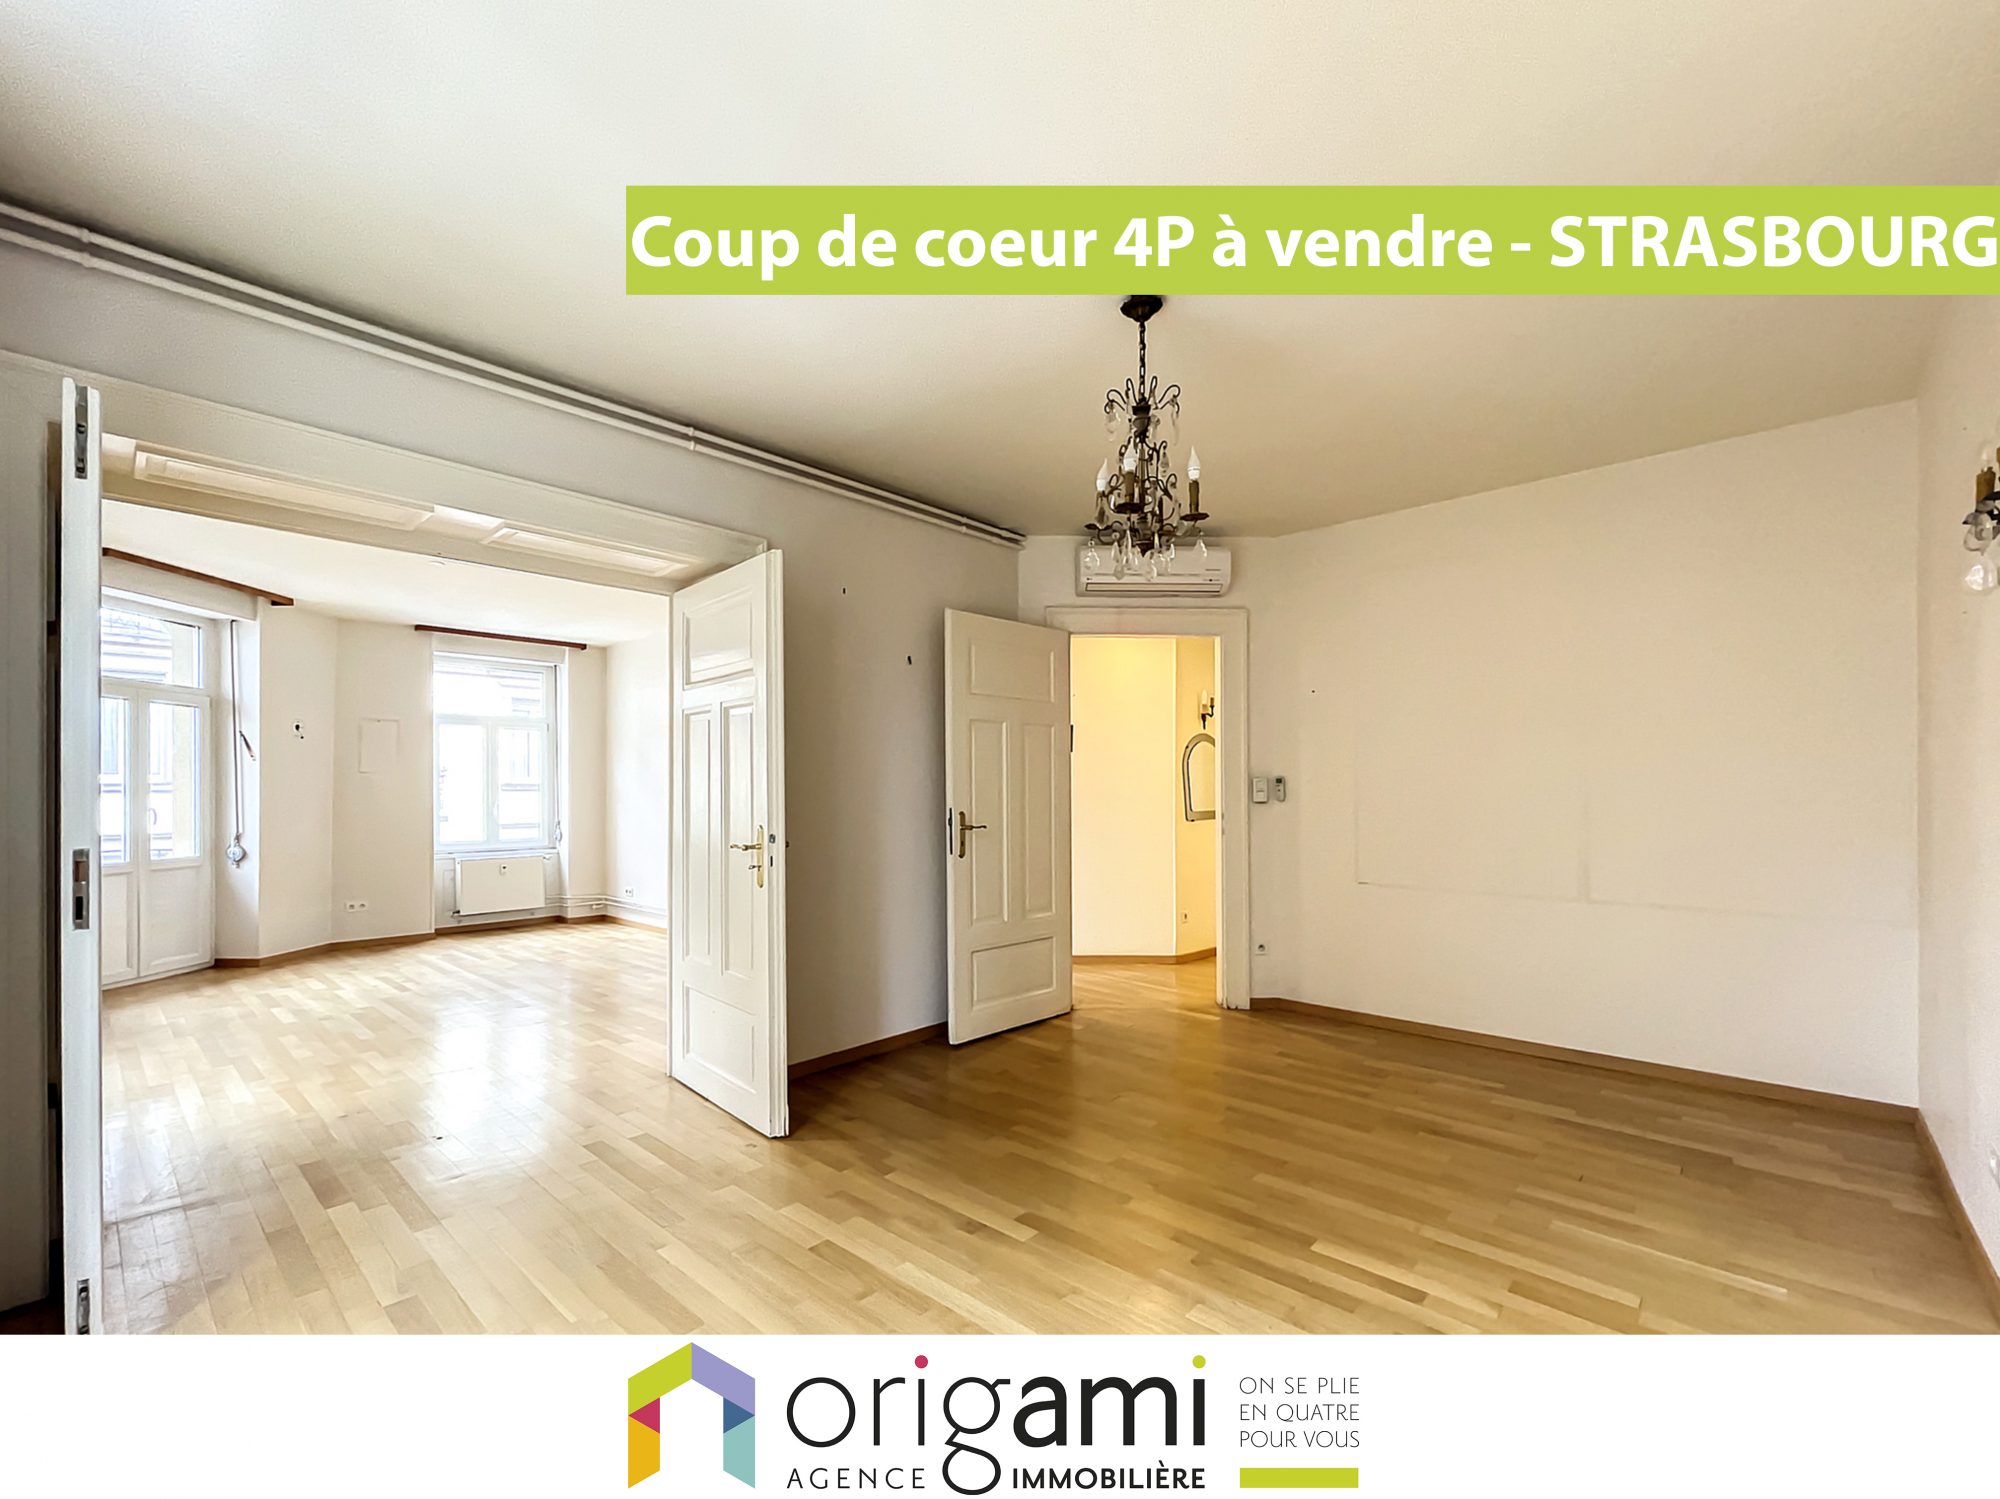 Vente Appartement 103m² 4 Pièces à Strasbourg (67200) - Origami